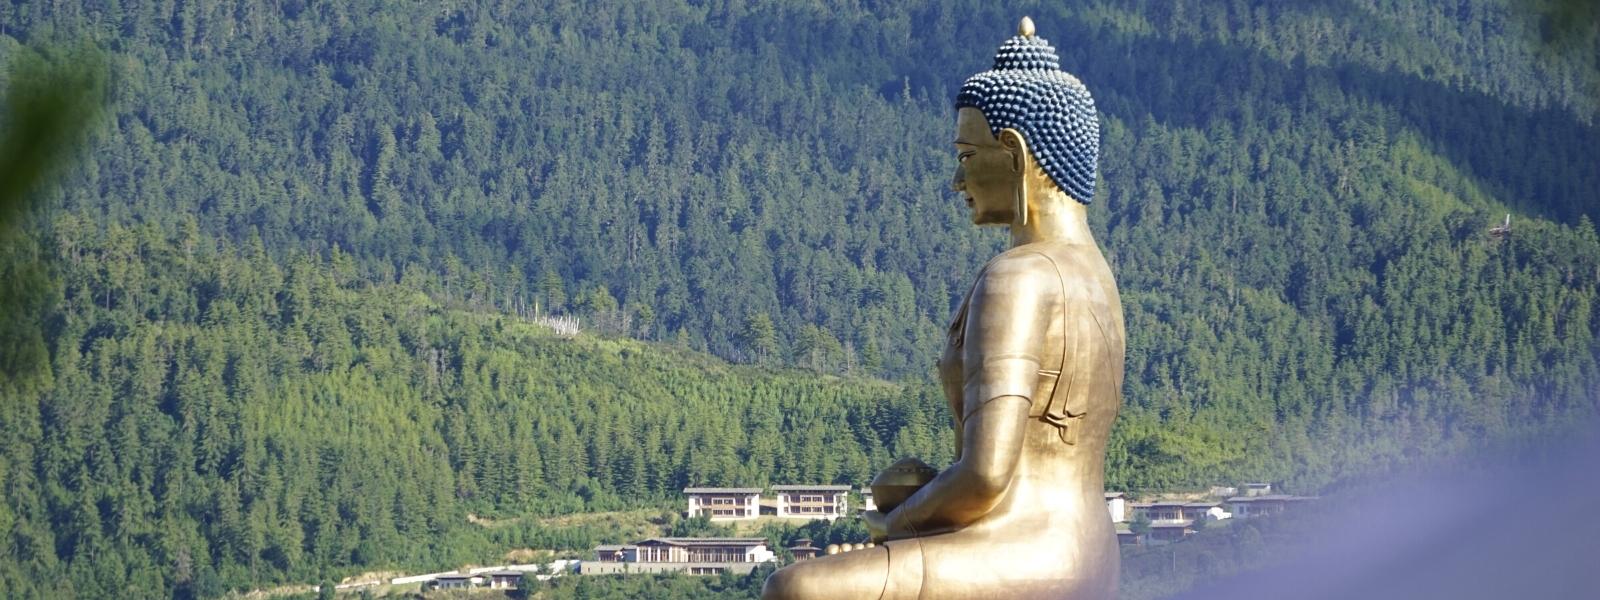 Statue bouddha